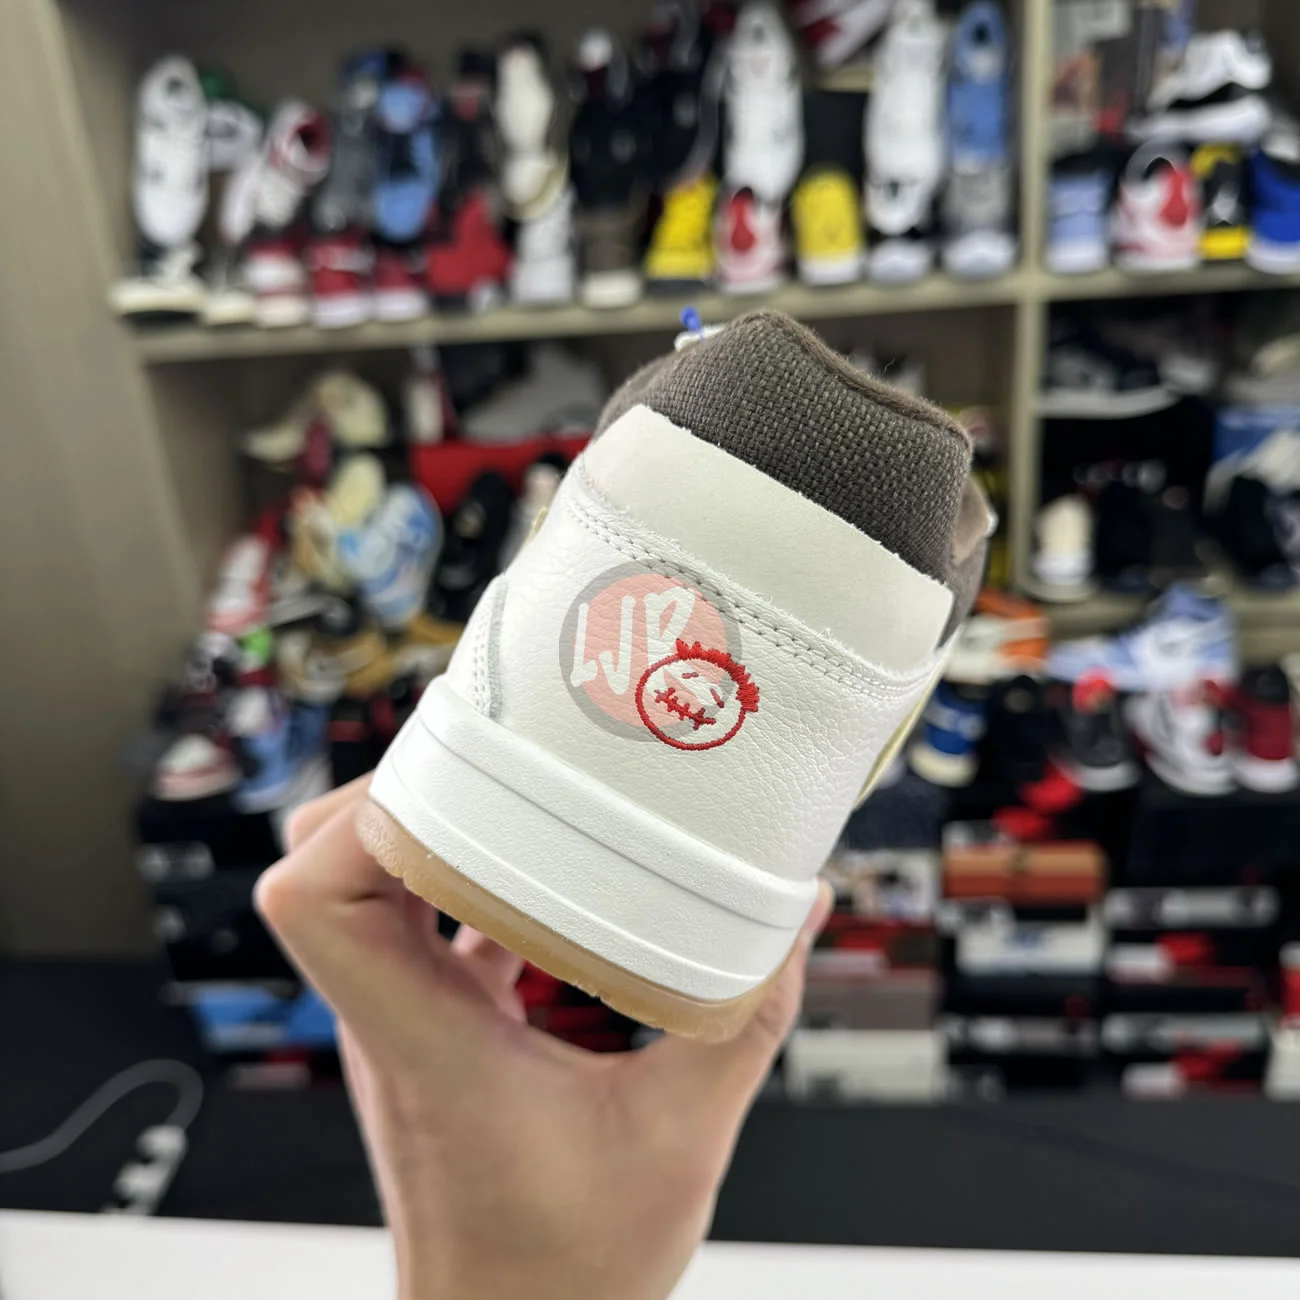 Travis Scott X Jordan Cut The Check Trainer Release Date Ljr Sneakers (10) - bc-ljr.com